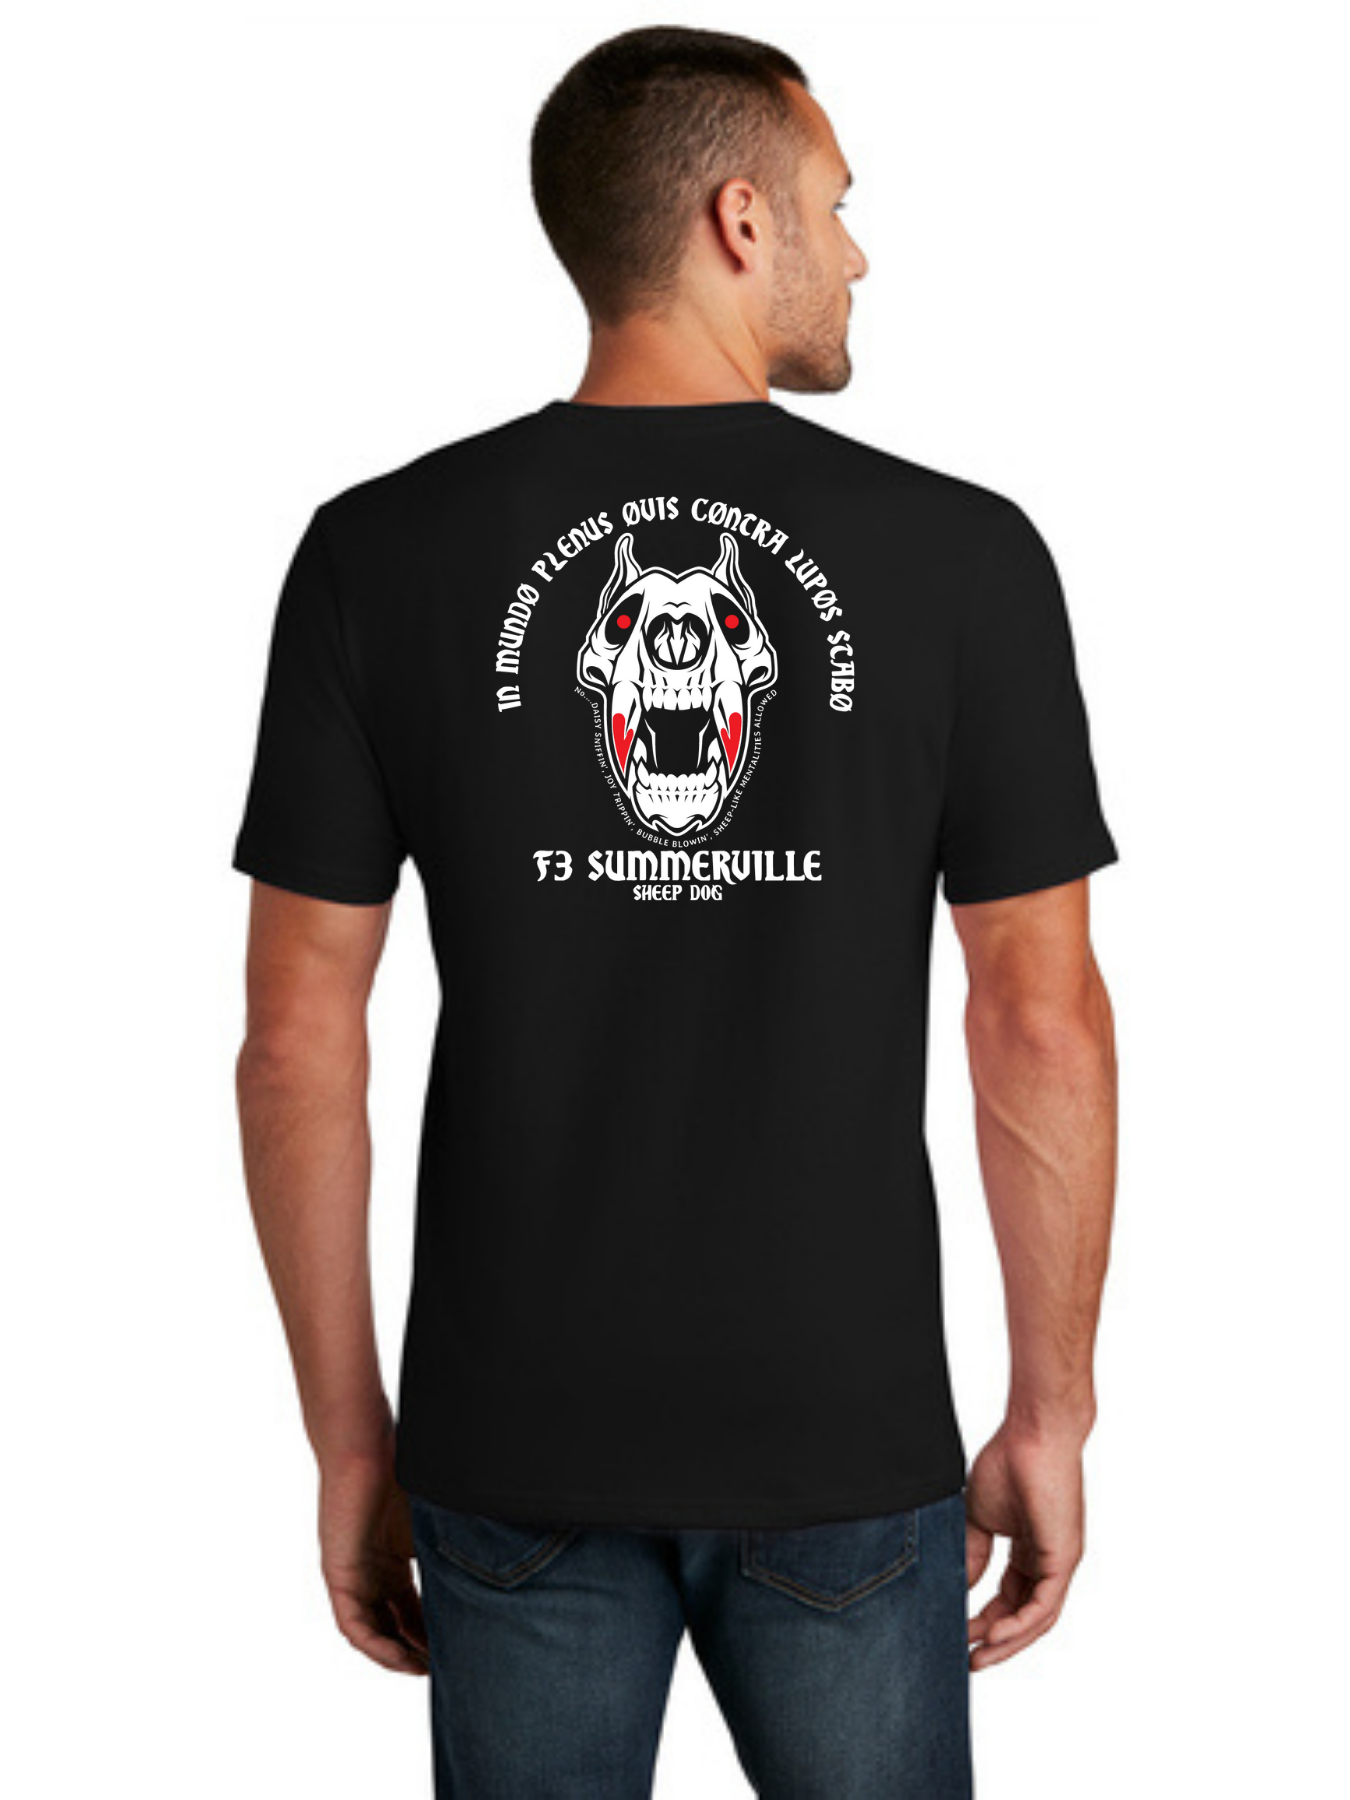 F3 Summerville Sheep Dog Pre-Order May 2022